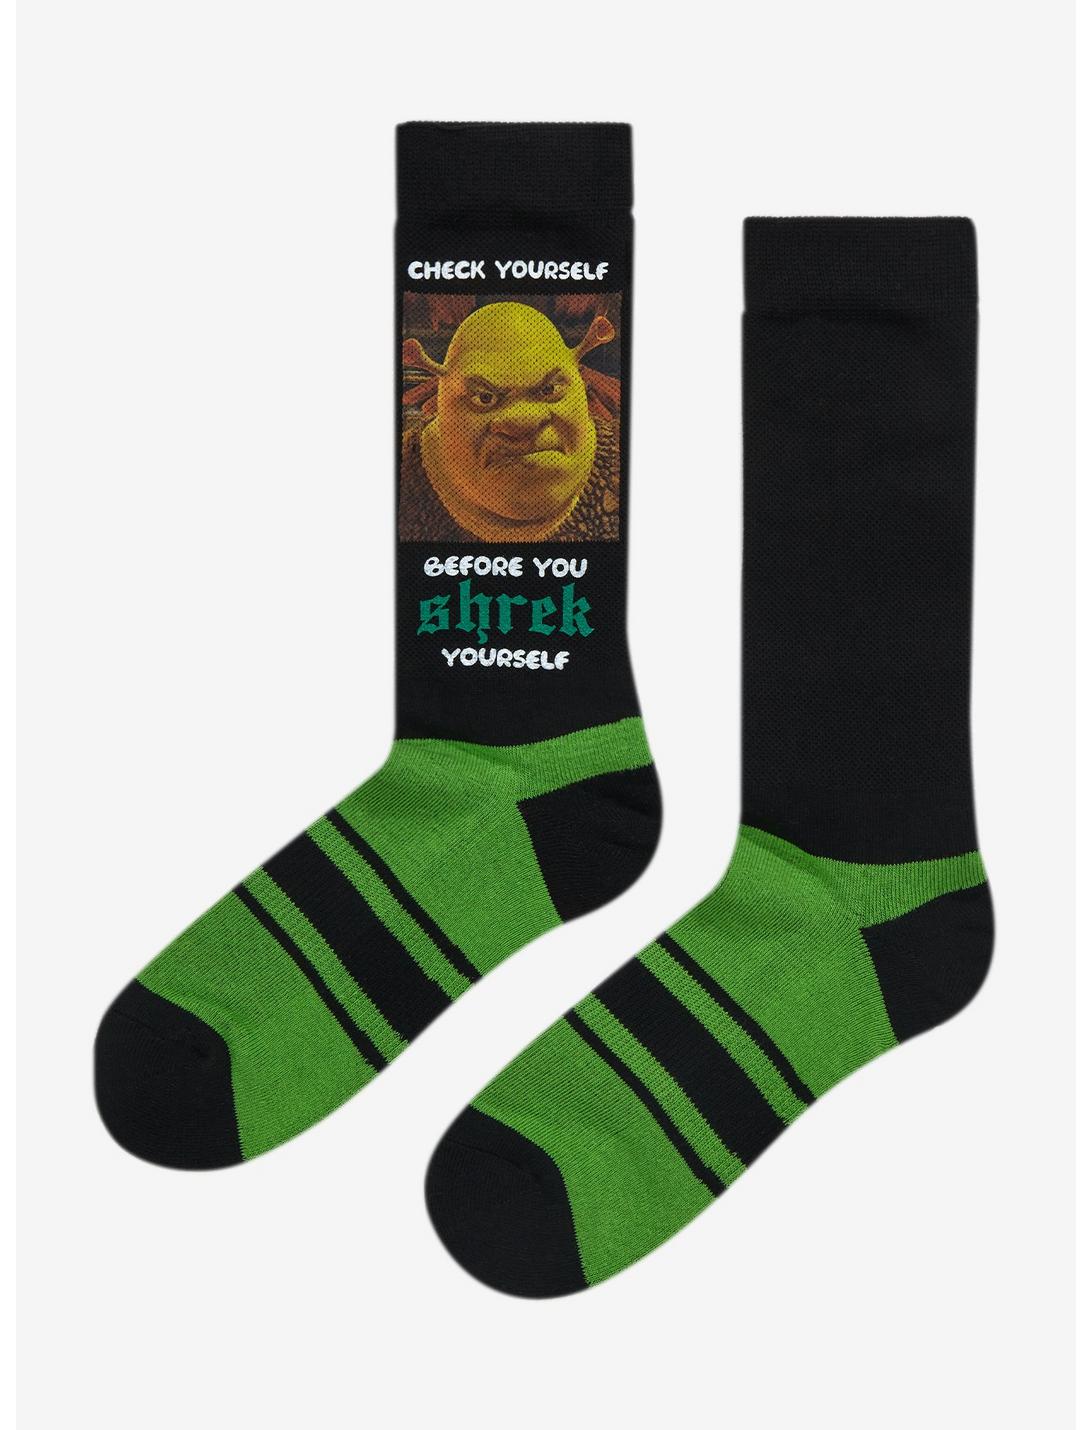 Shrek Check Yourself Crew Socks, , hi-res